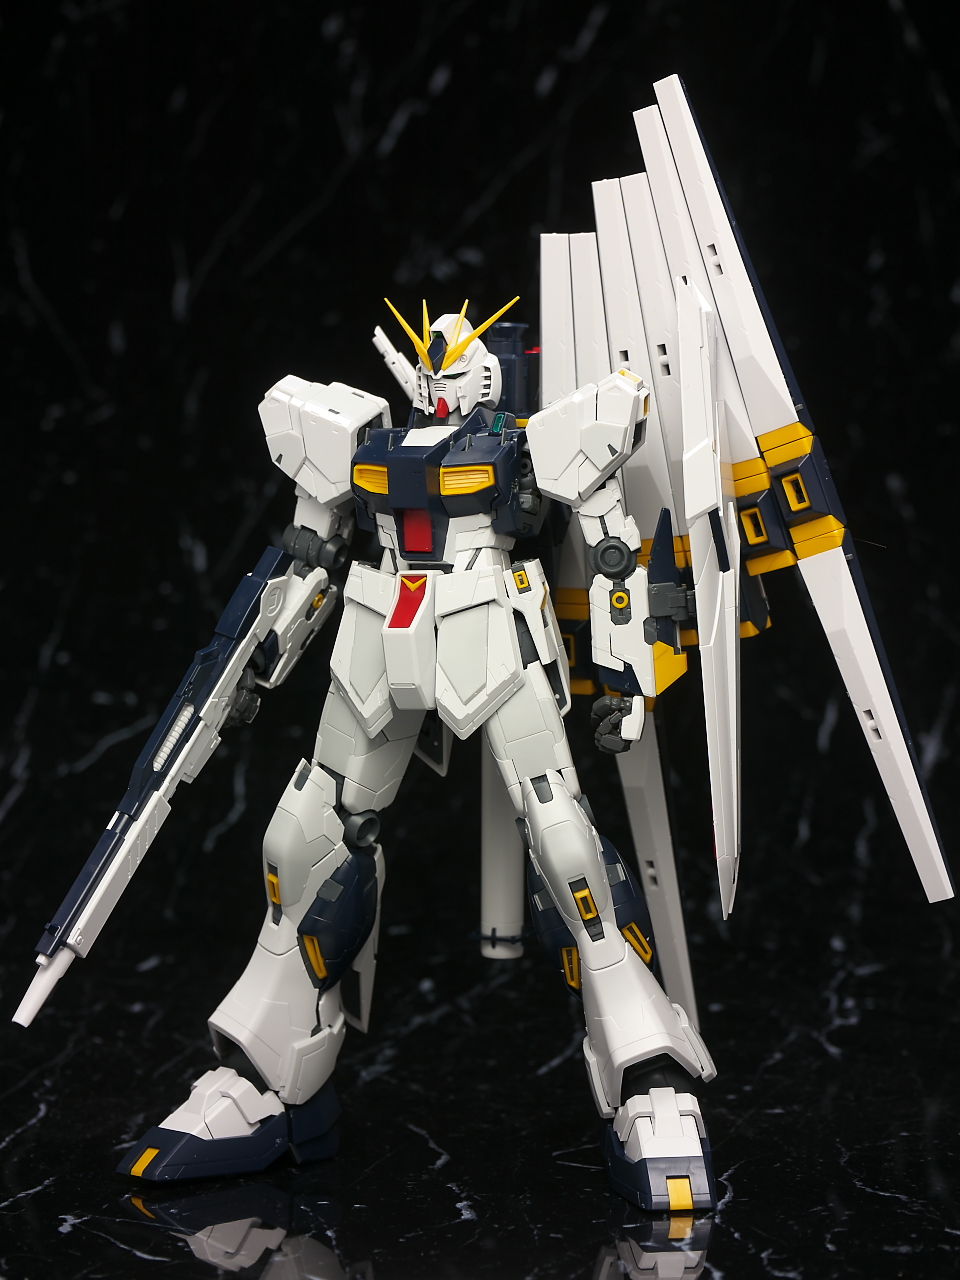 MG 1/100 nu Gundam ver. Ka painted build - Gundam Kits 